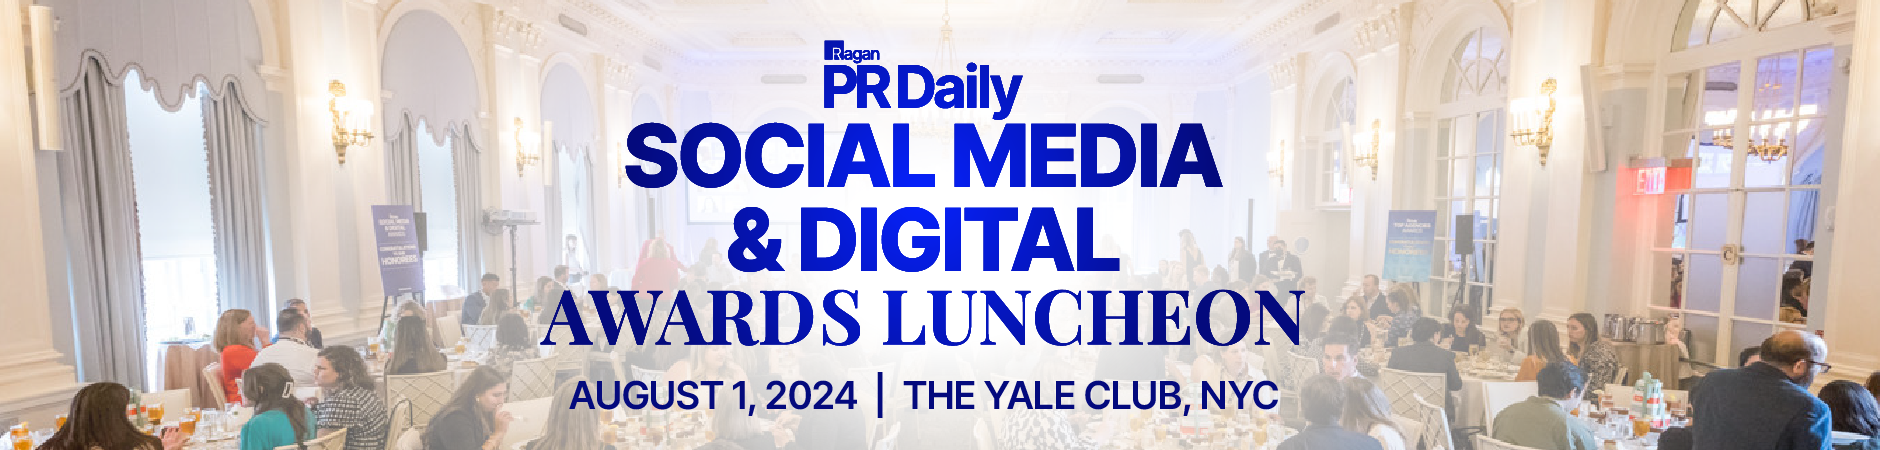 PR Daily Social Media & Digital Awards Luncheon 2024  (Copy)